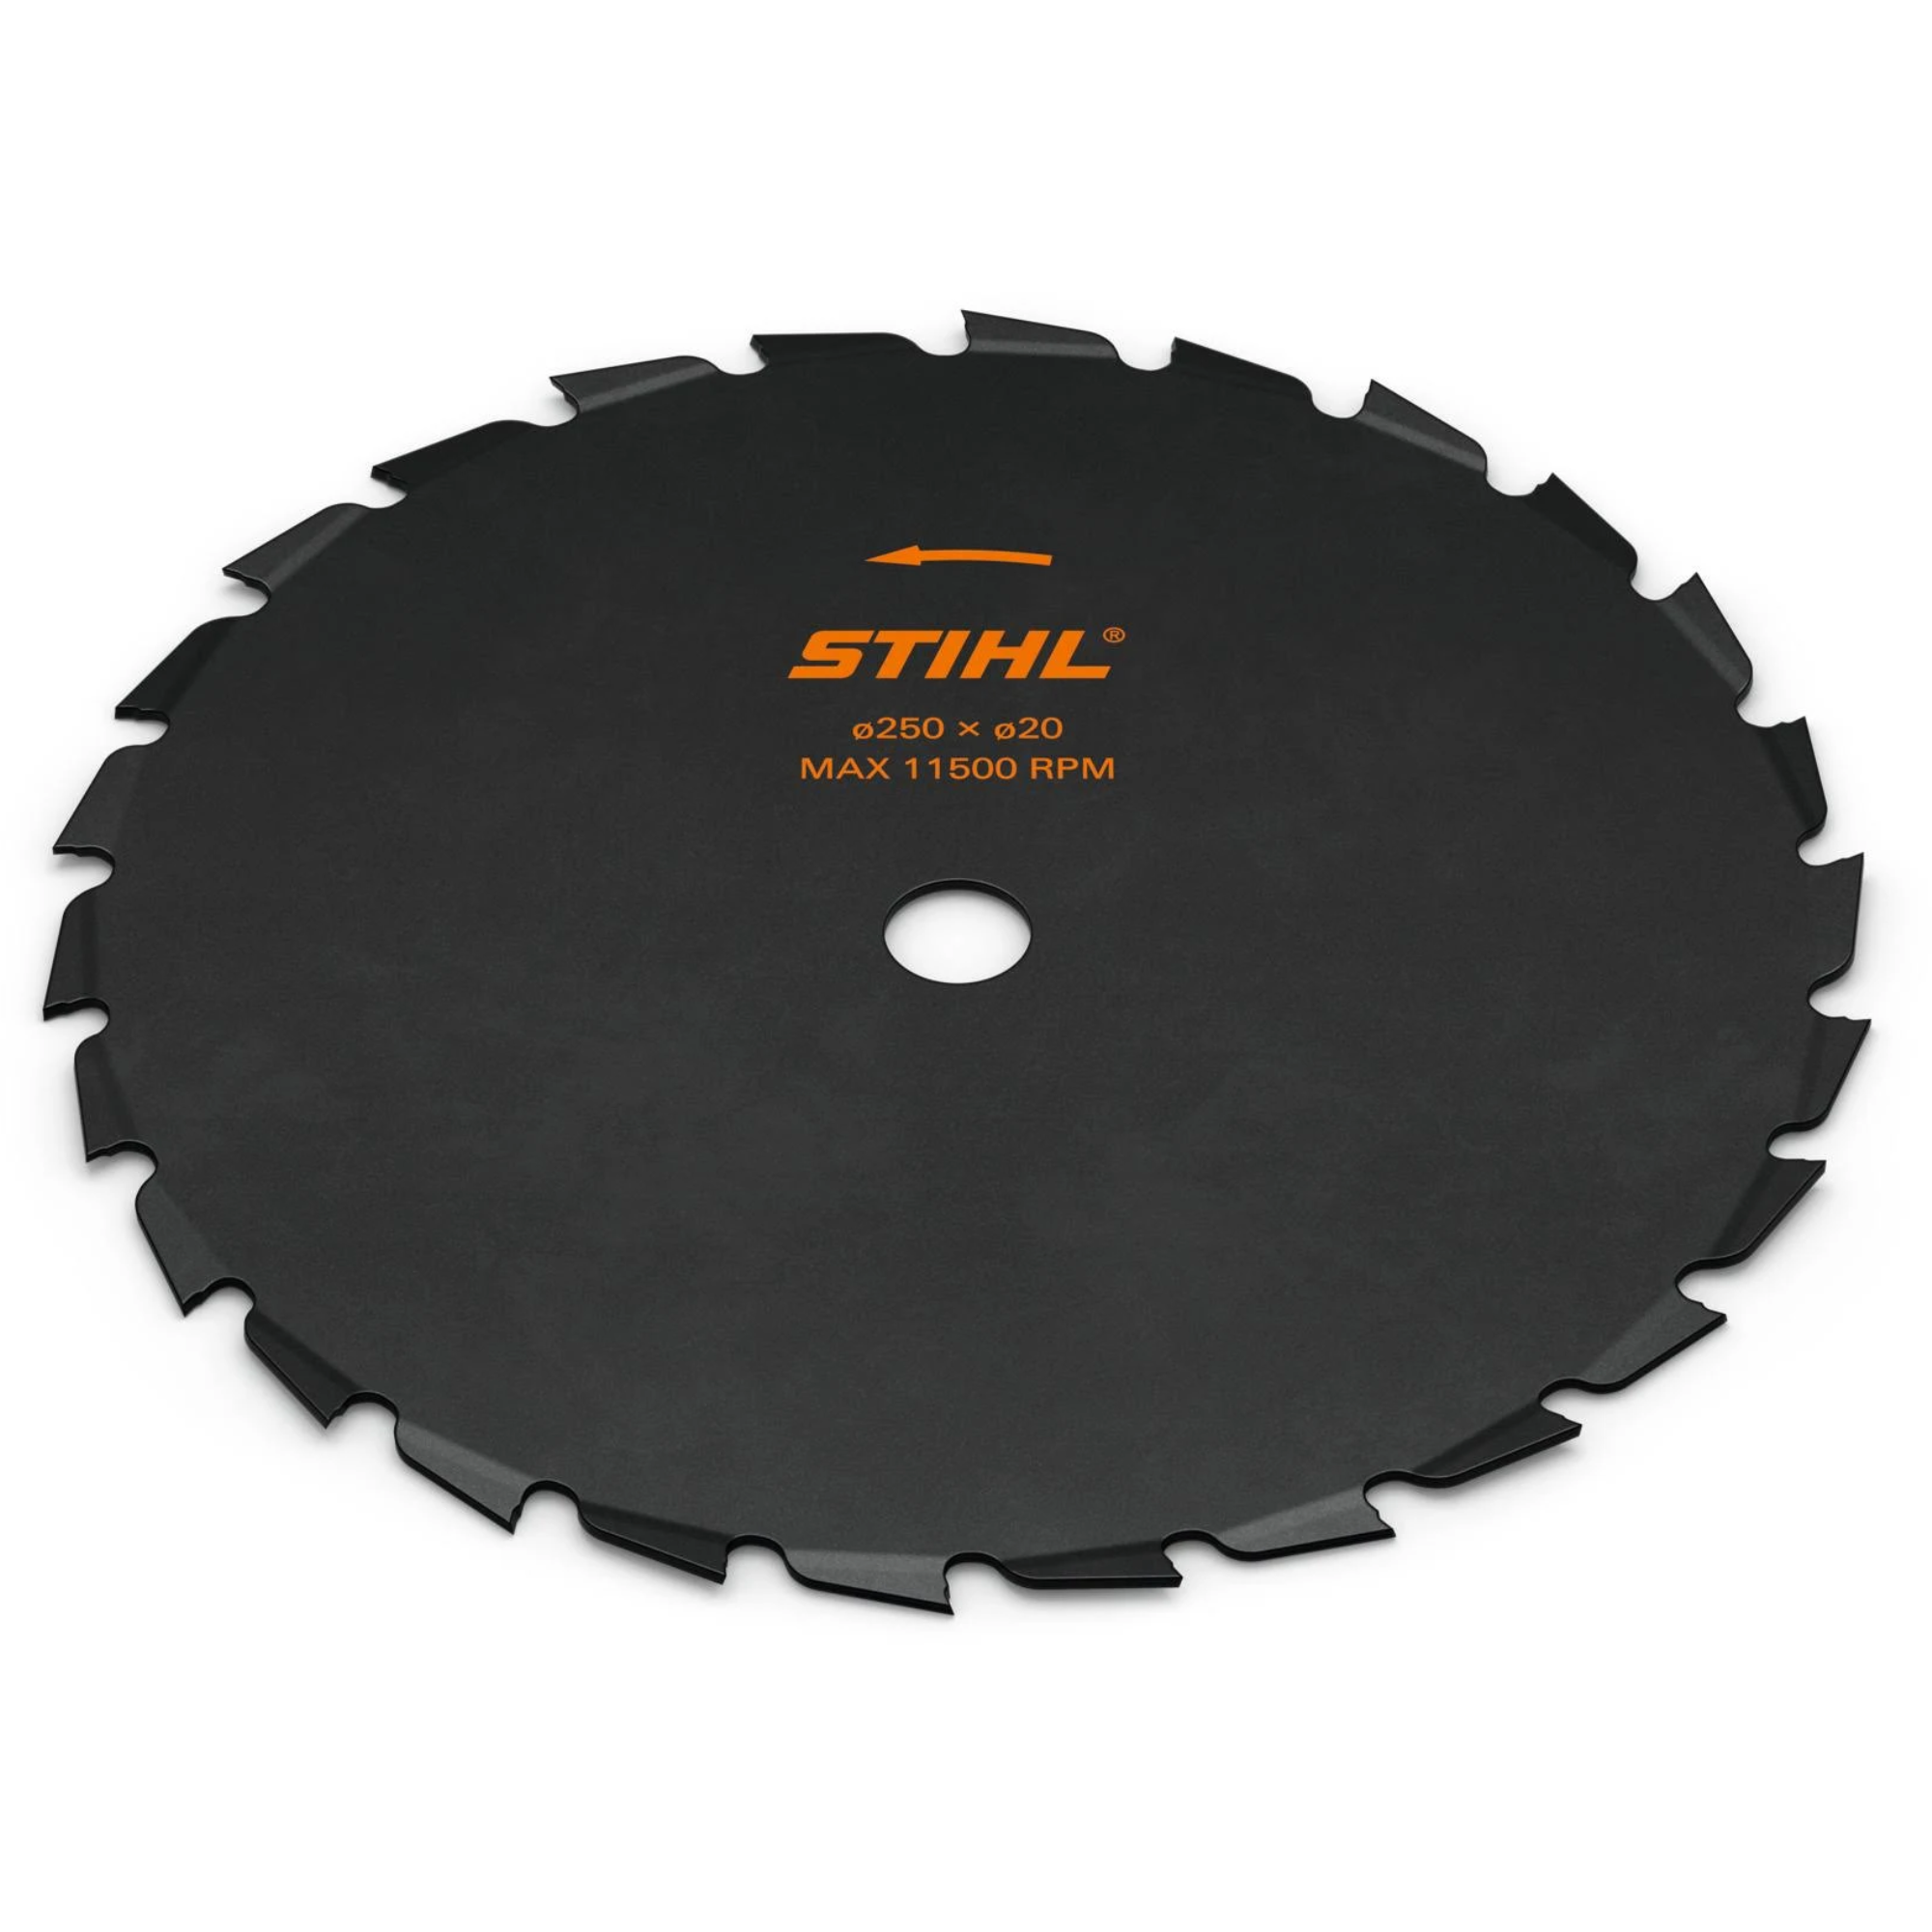 STIHL Circular Saw Blade | Chisel Blade | 225mm | 4110 713 4204